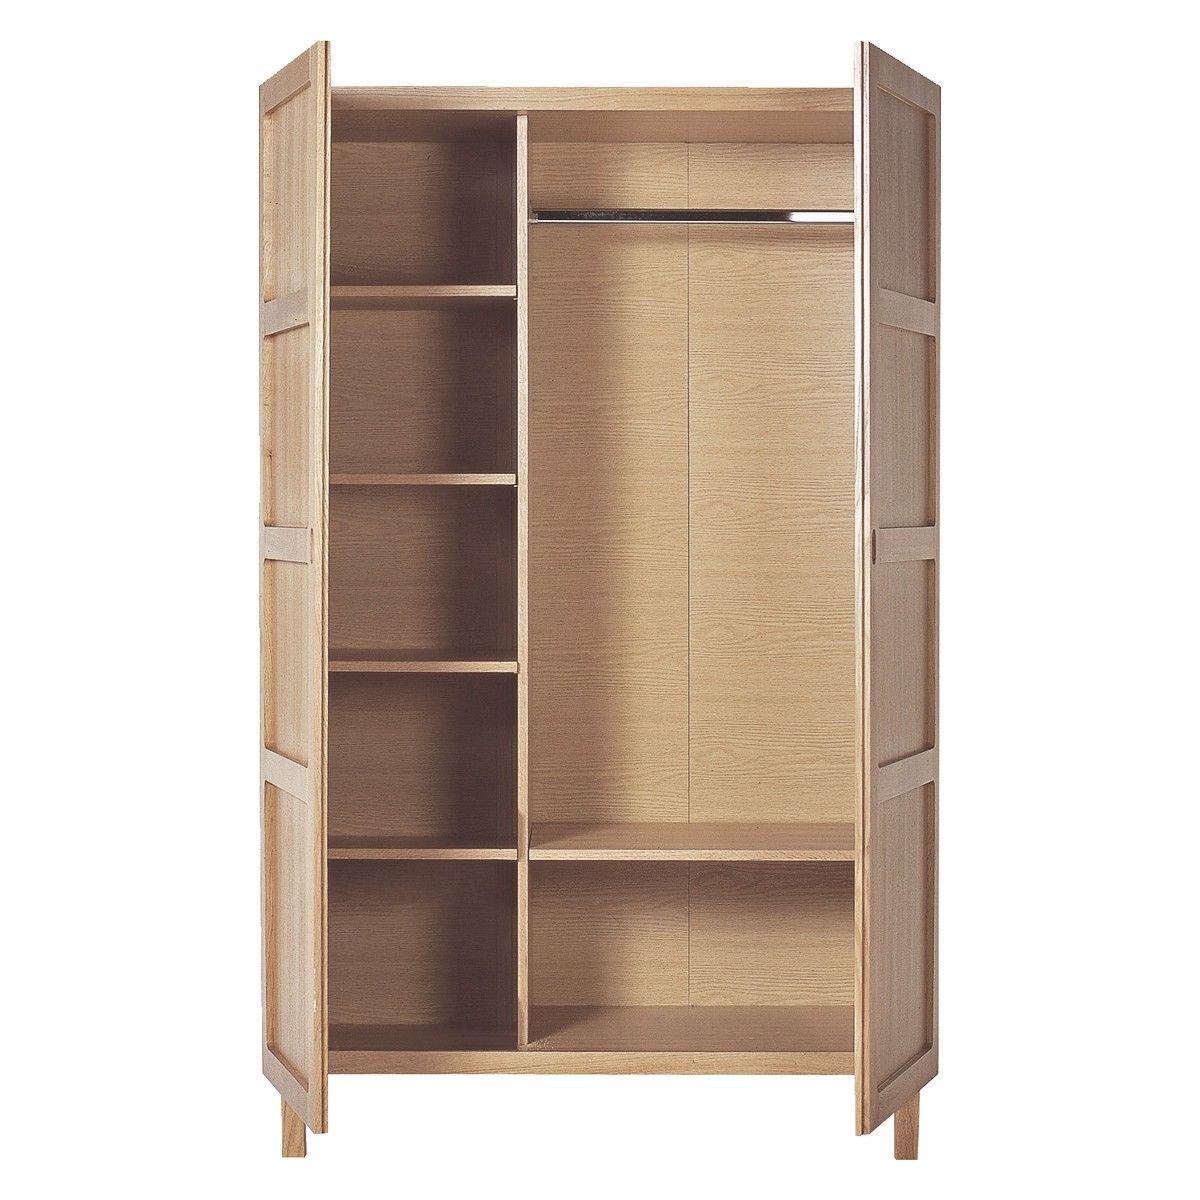 Radius Oak 2 Door Wardrobe Buy Now At Habitat Uk Regarding Wardrobes With Shelves And Drawers (View 14 of 15)